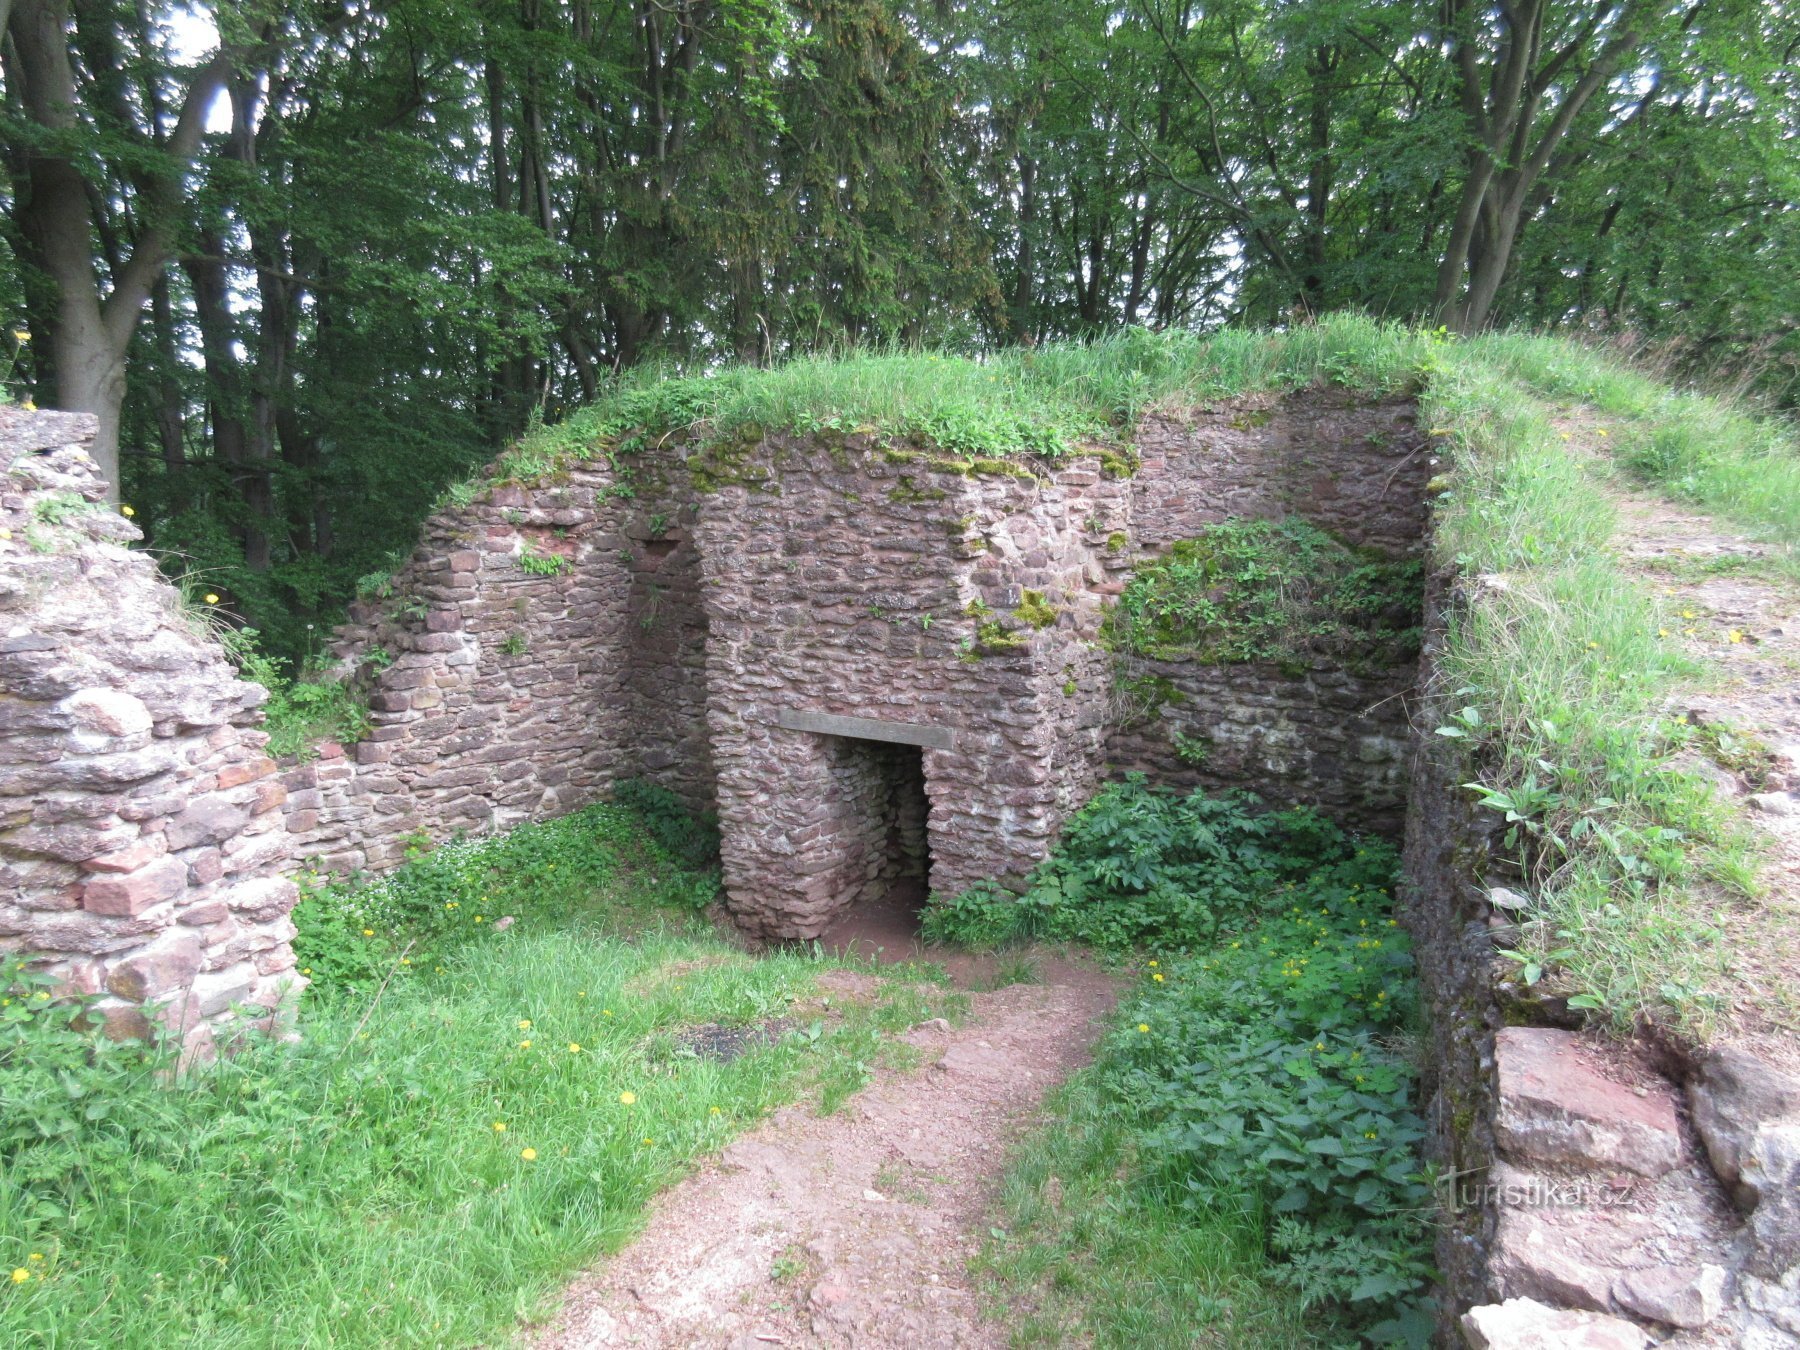 Ruiny zamku Brecštejn, Havlův Hrádeček i ścieżka dydaktyczna Wokół Pekelské vrch